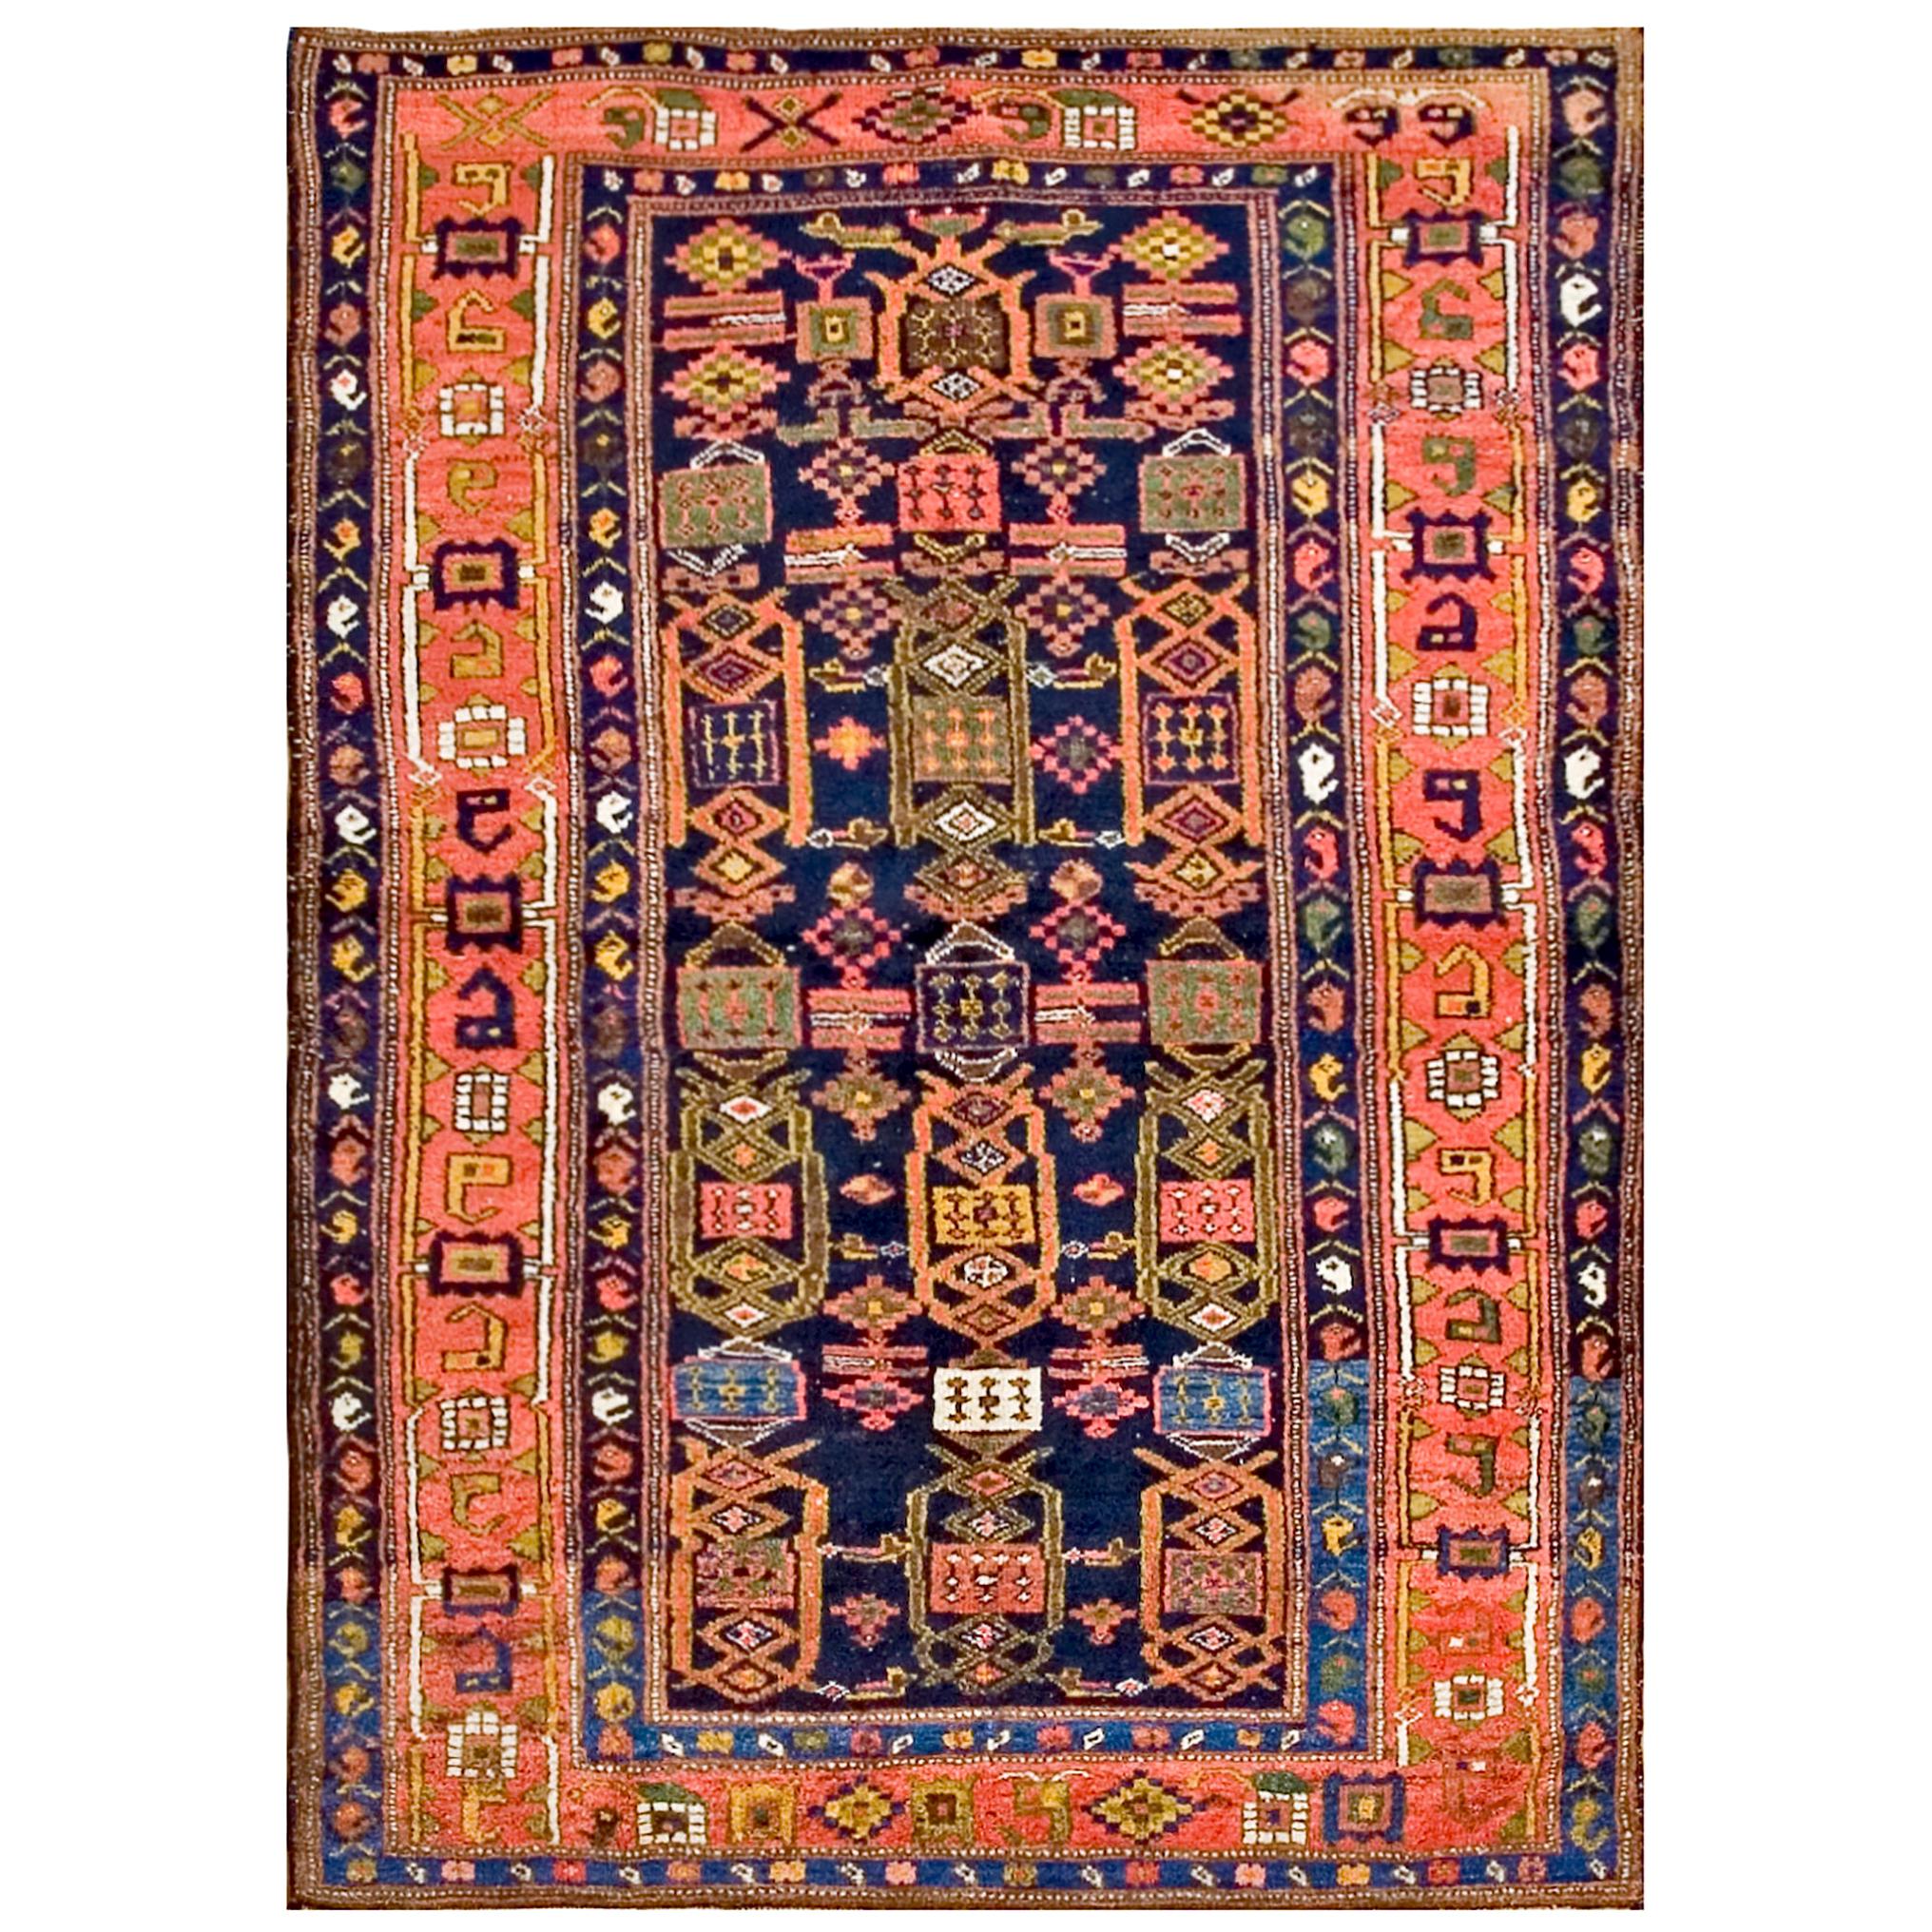 Tapis kurde persan du début du 20e siècle ( 4'9" x 6'10" - 145 x 208 )